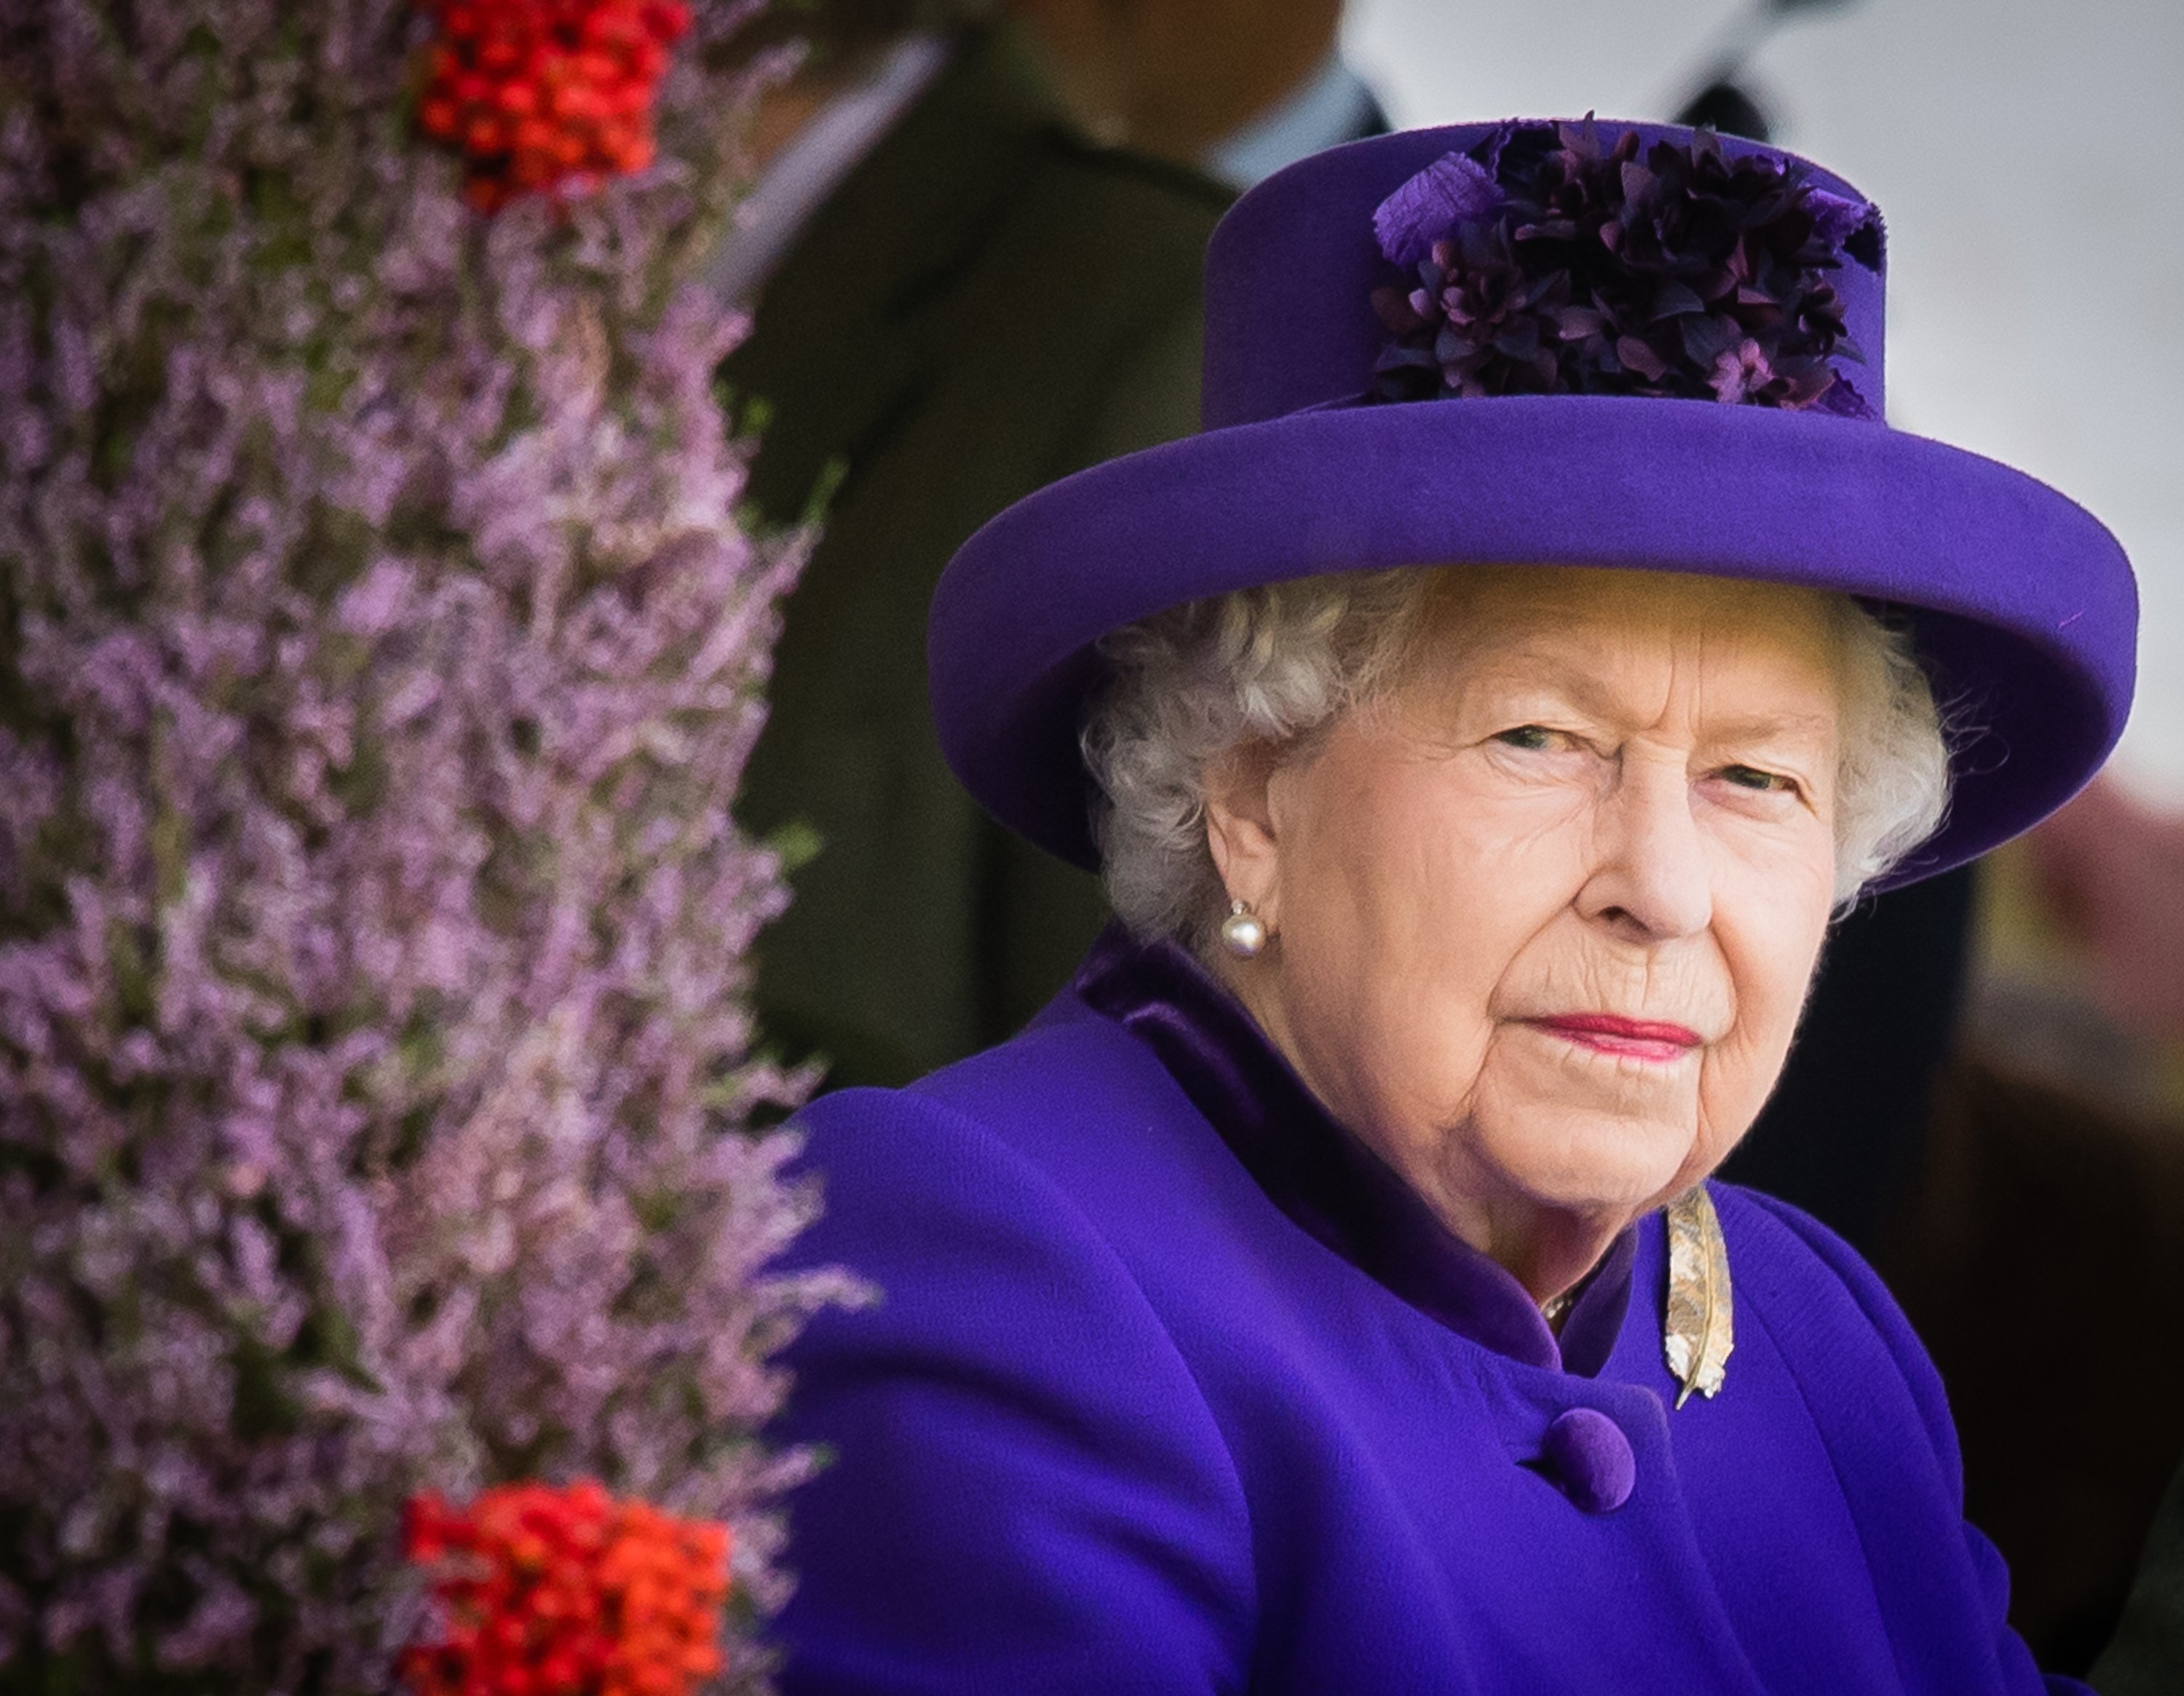 Königin Elizabeth II. nimmt an den Braemar Highland Games 2019 am 7. September 2019 in Braemar, Schottland, teil. | Quelle: Getty Images